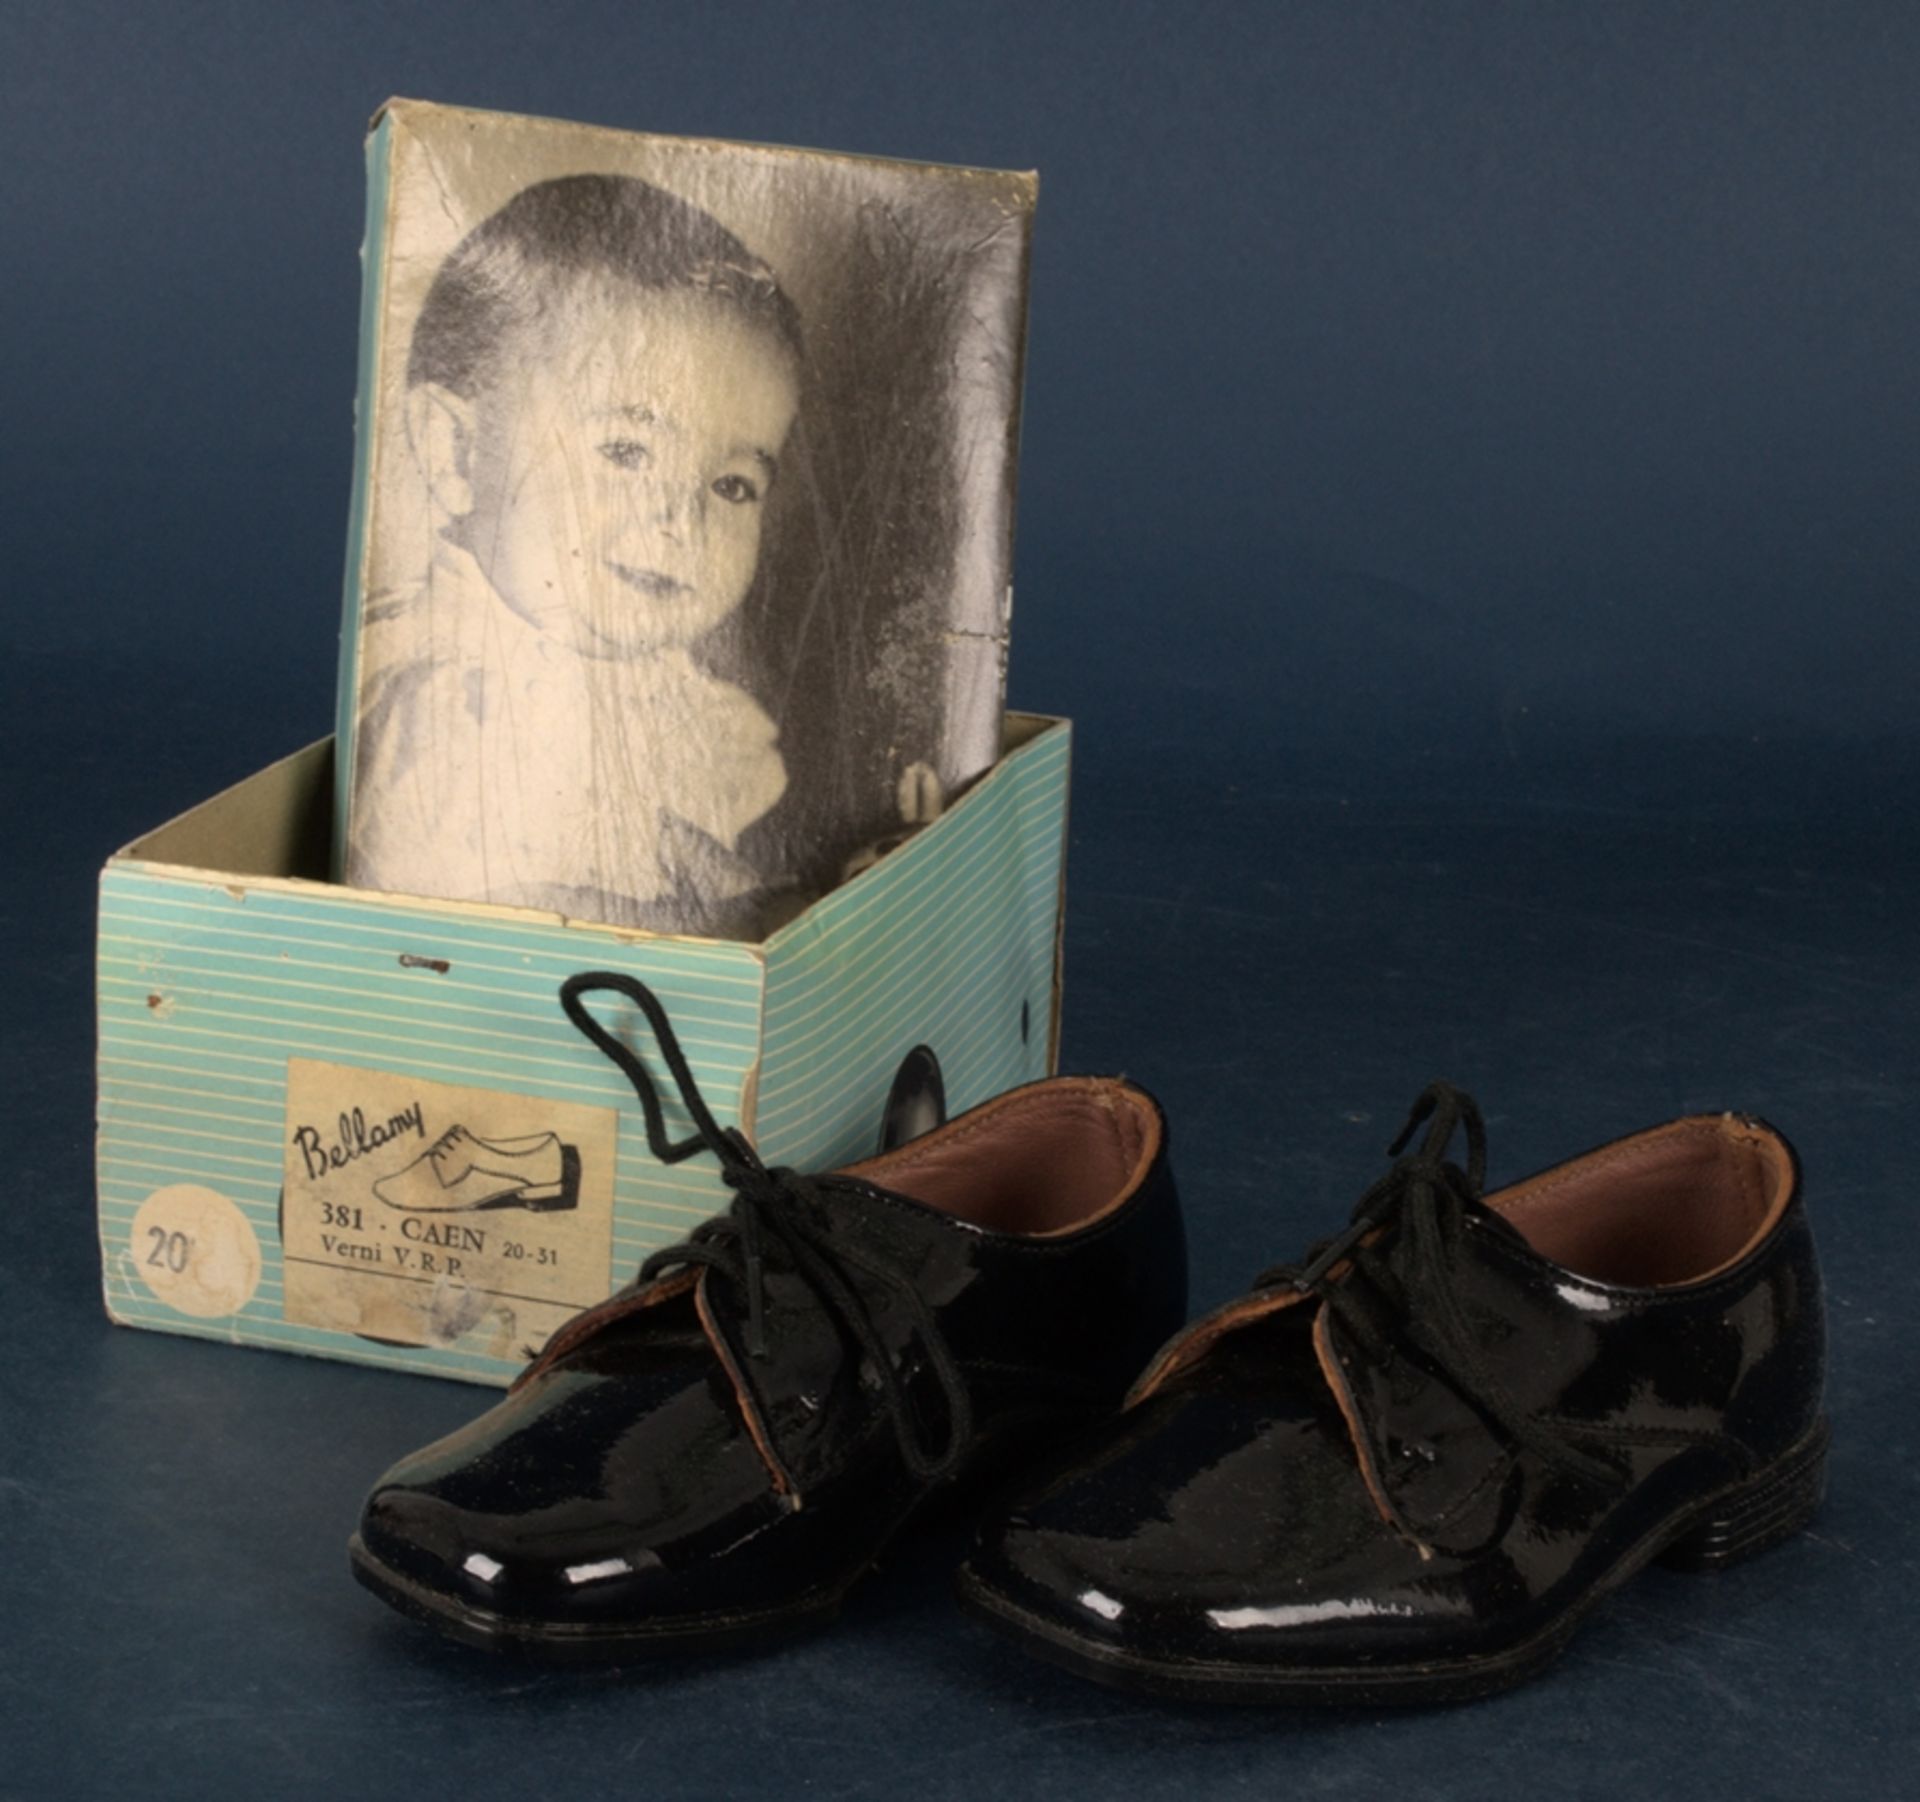 Paar original verpackter Kinderschuhe der Marke Bellamy, ungetragen, wohl 1930er/40er Jahre. - Image 3 of 4